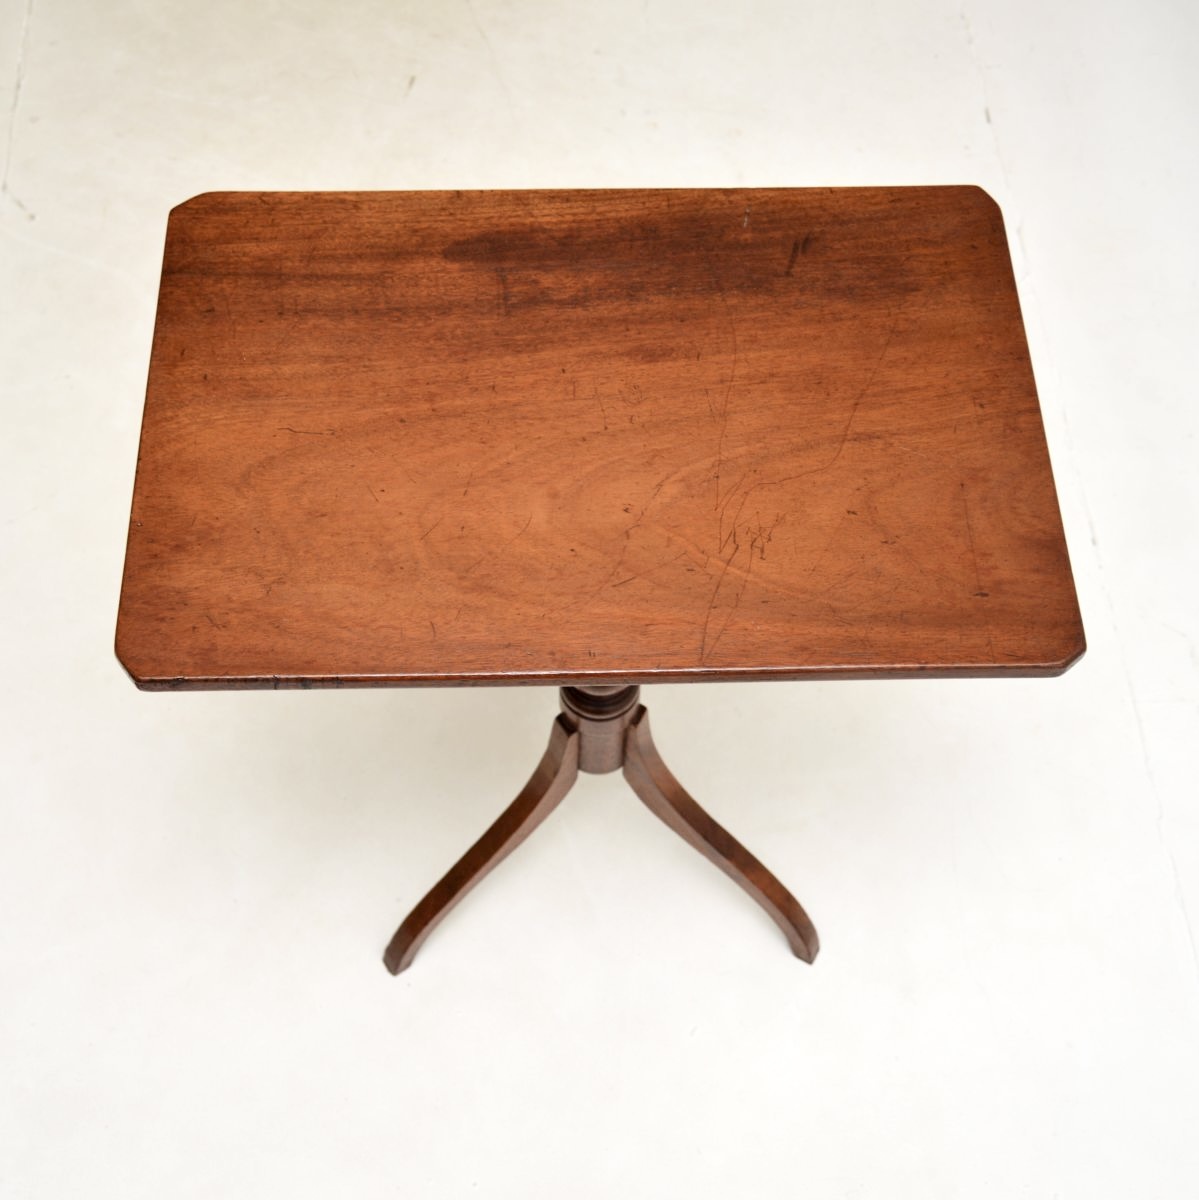 Antique Regency Period Mahogany Side Table